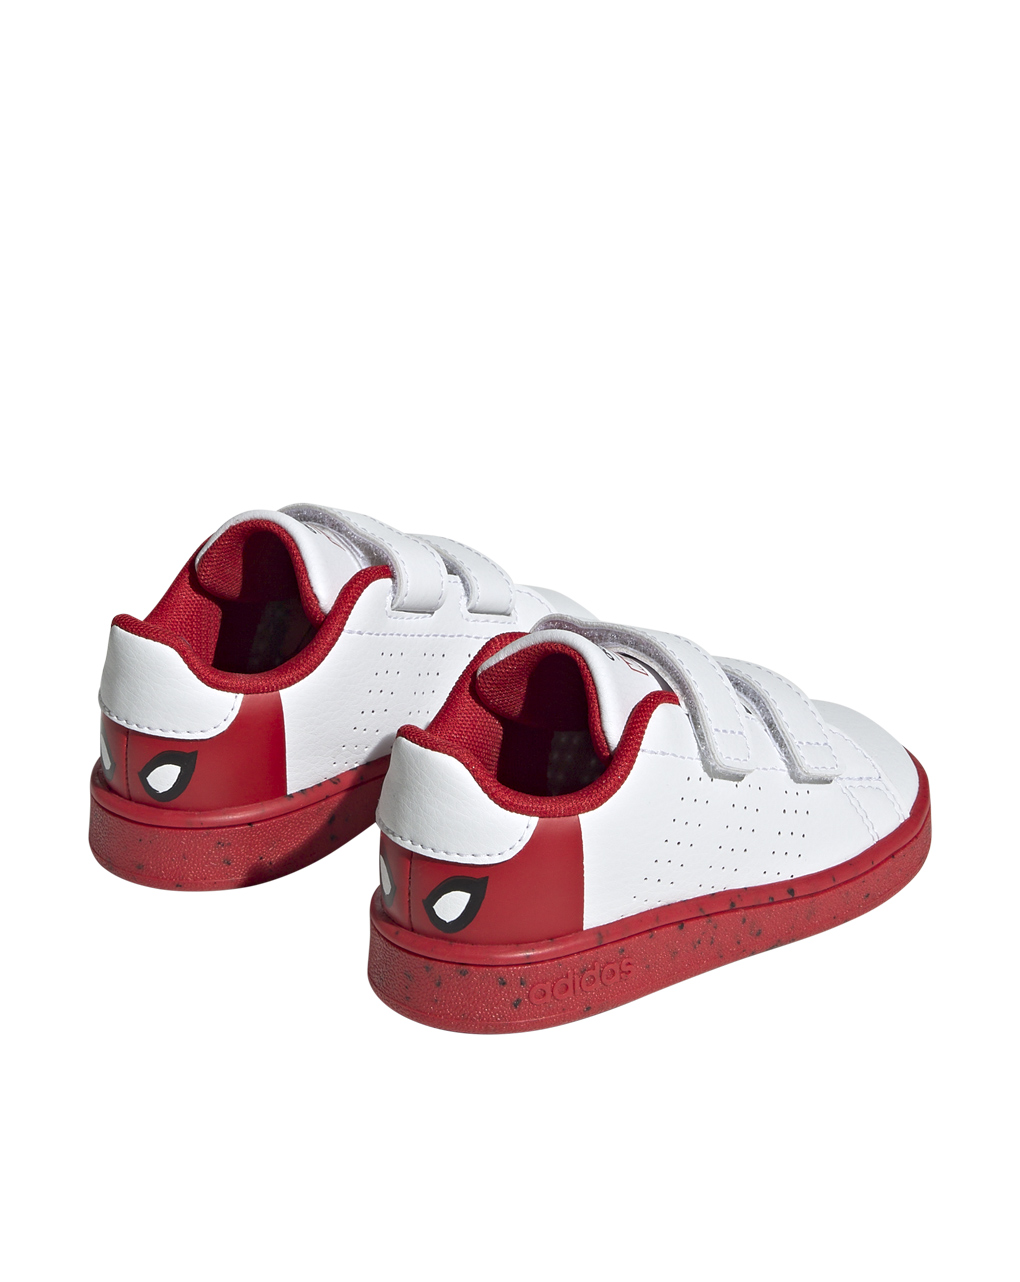 Adidas sneakers advantage spiderman hq8841 για αγόρι - Adidas